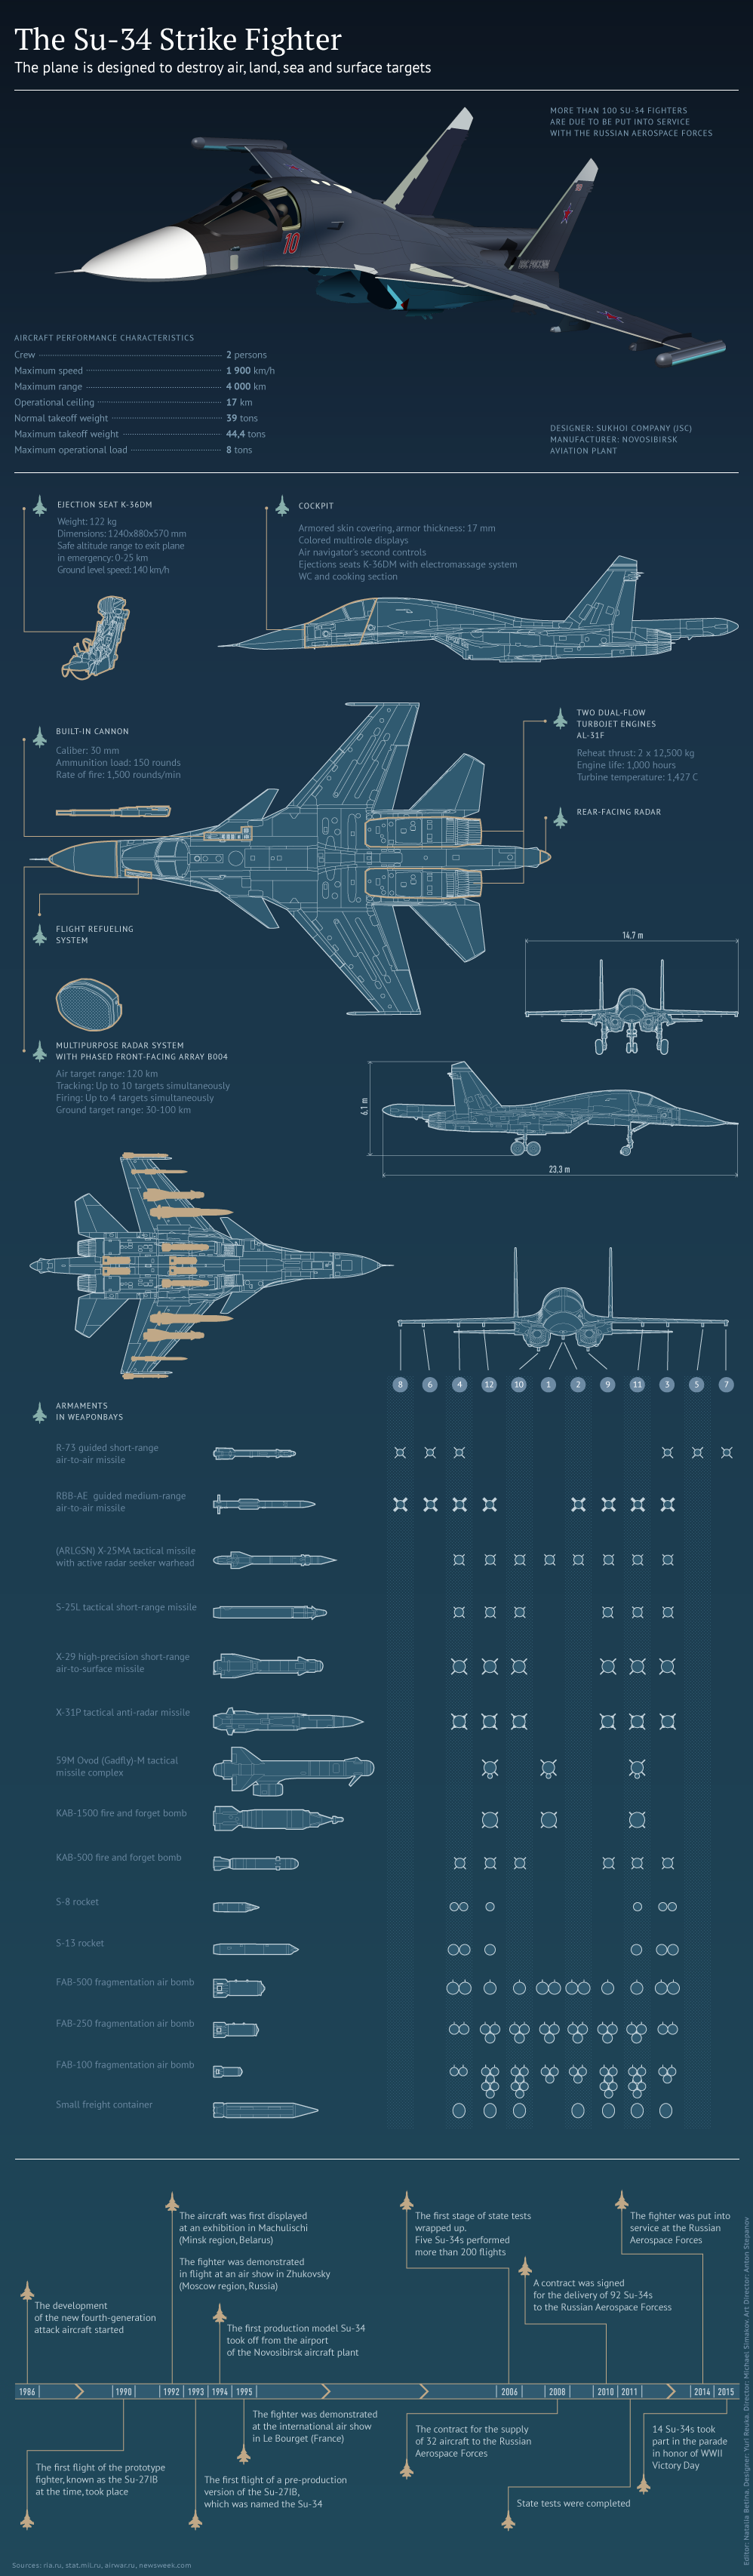 Su-34 infographic